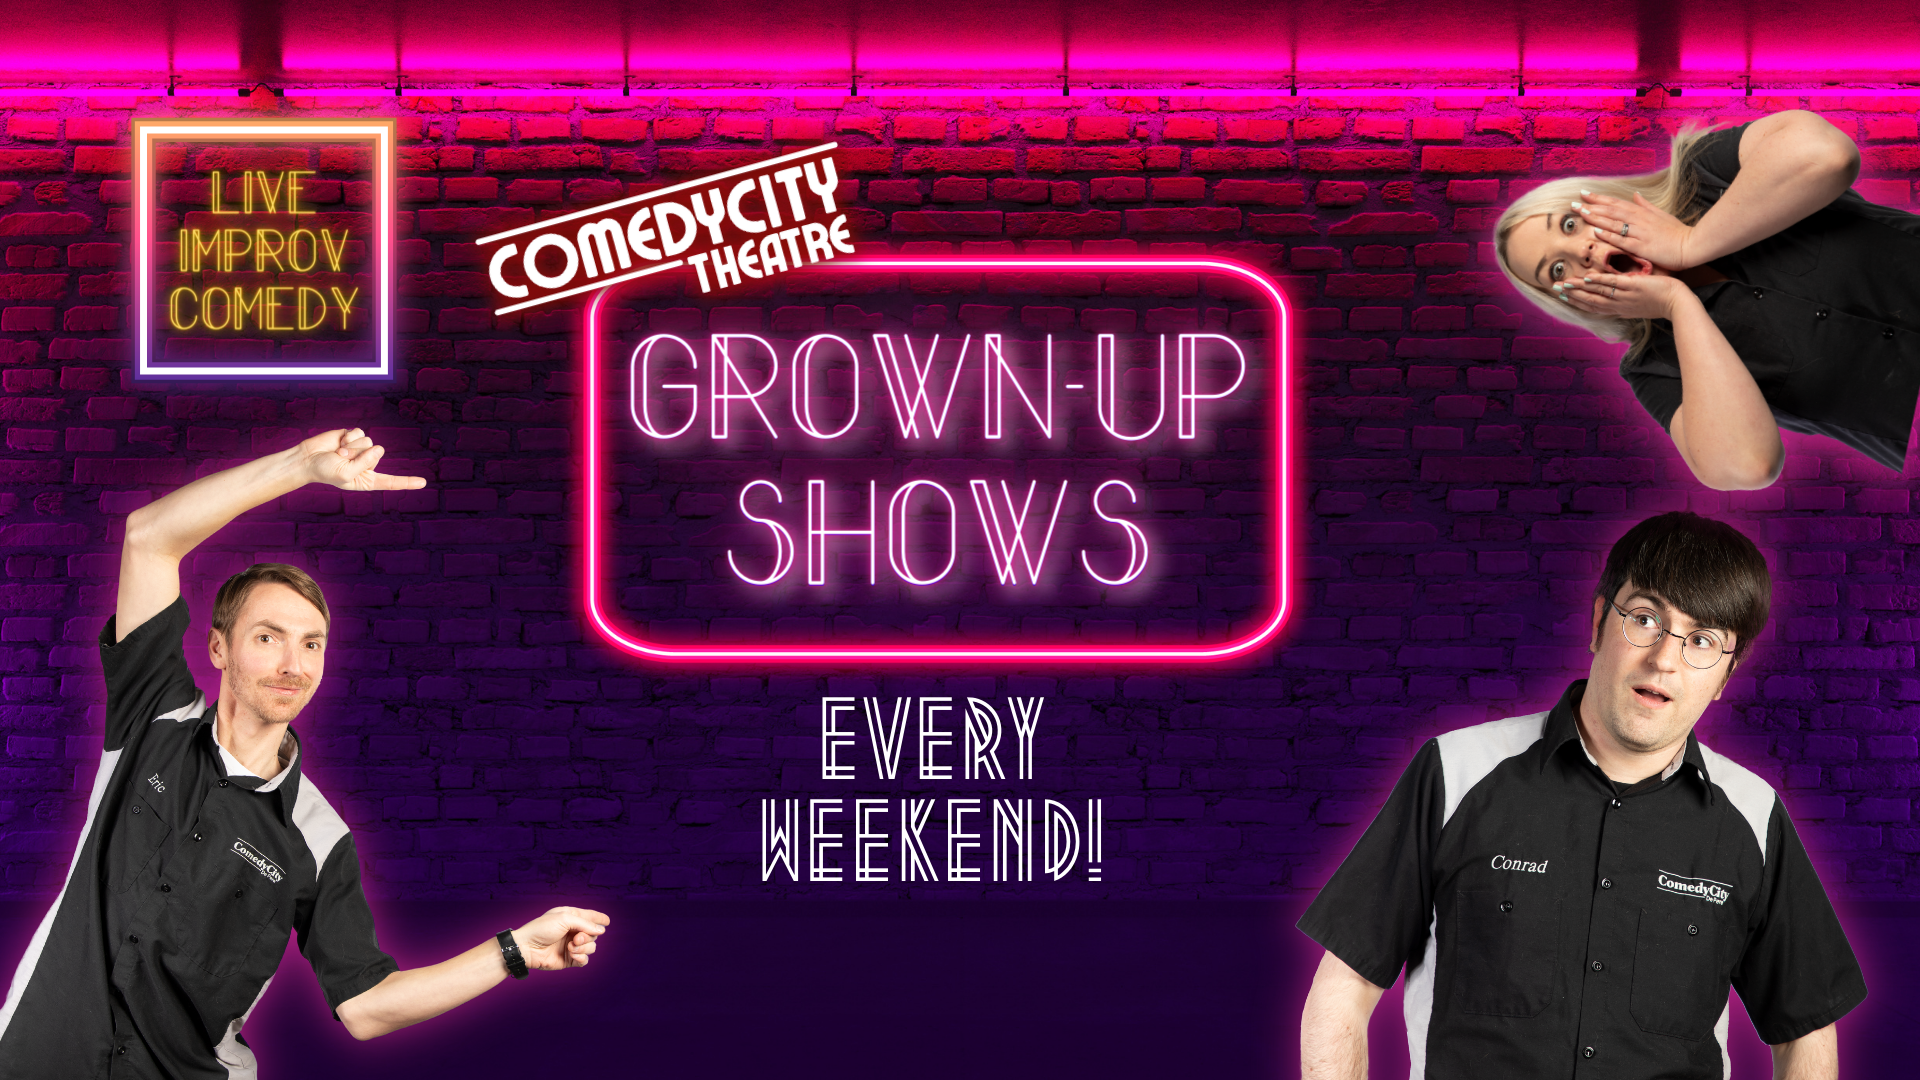 ComedyCity Grown-Up Show